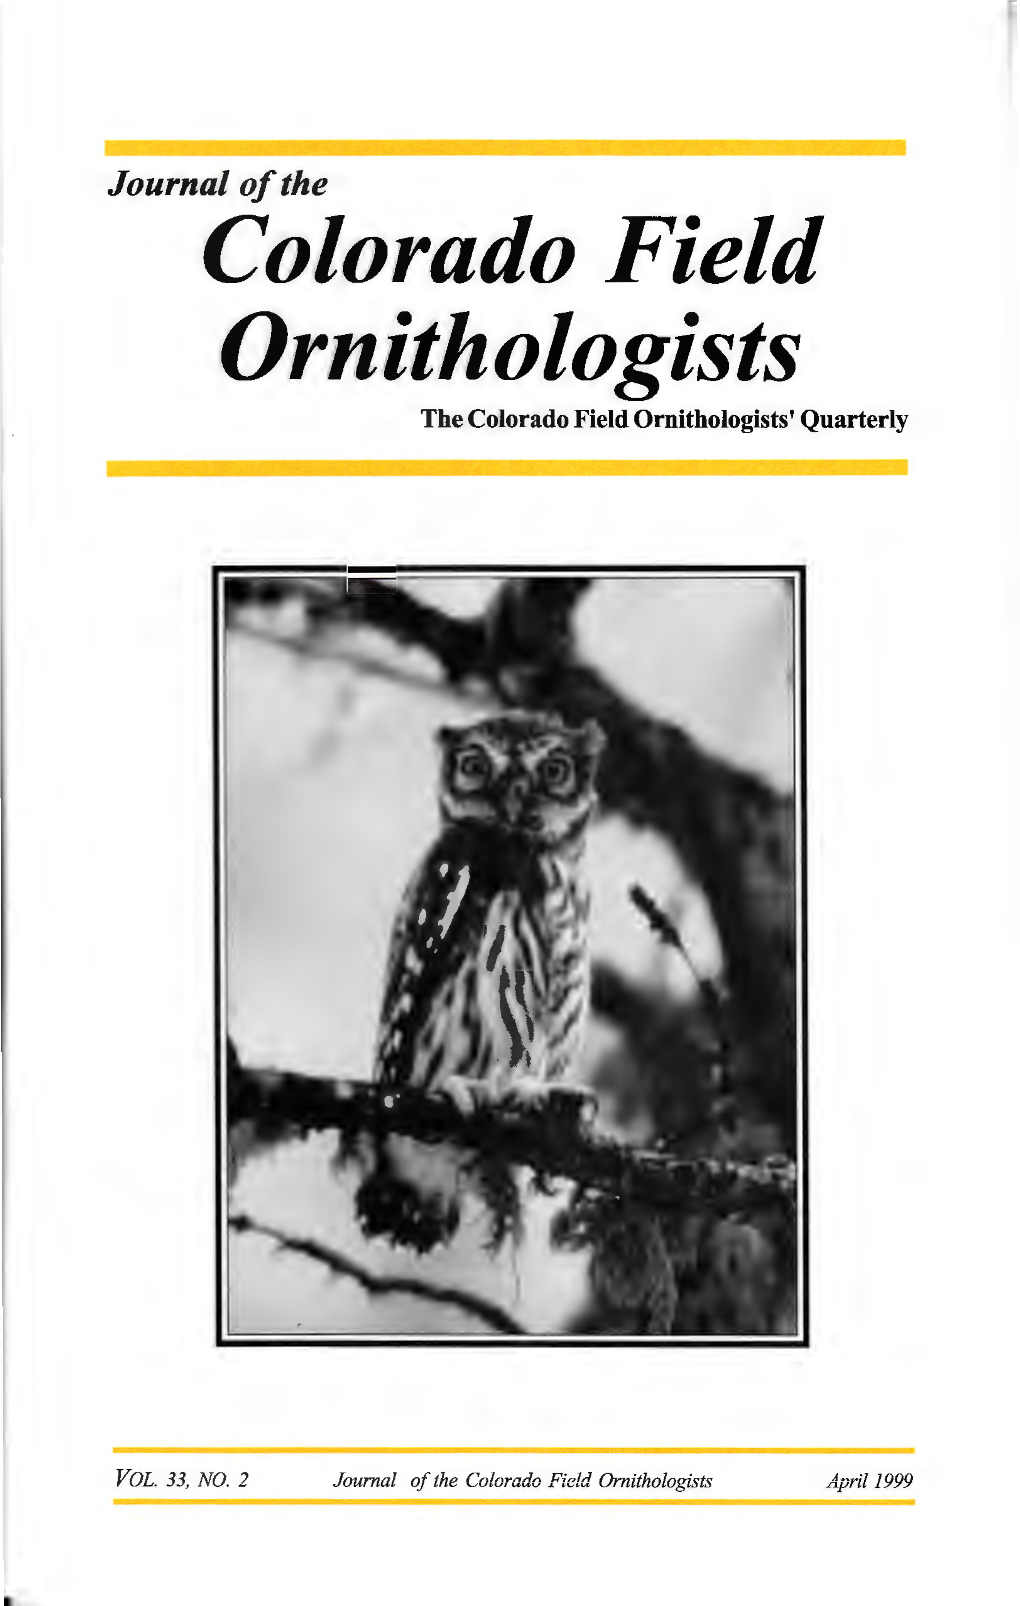 Ornithologists the Colorado Field Ornithologists' Quarterly